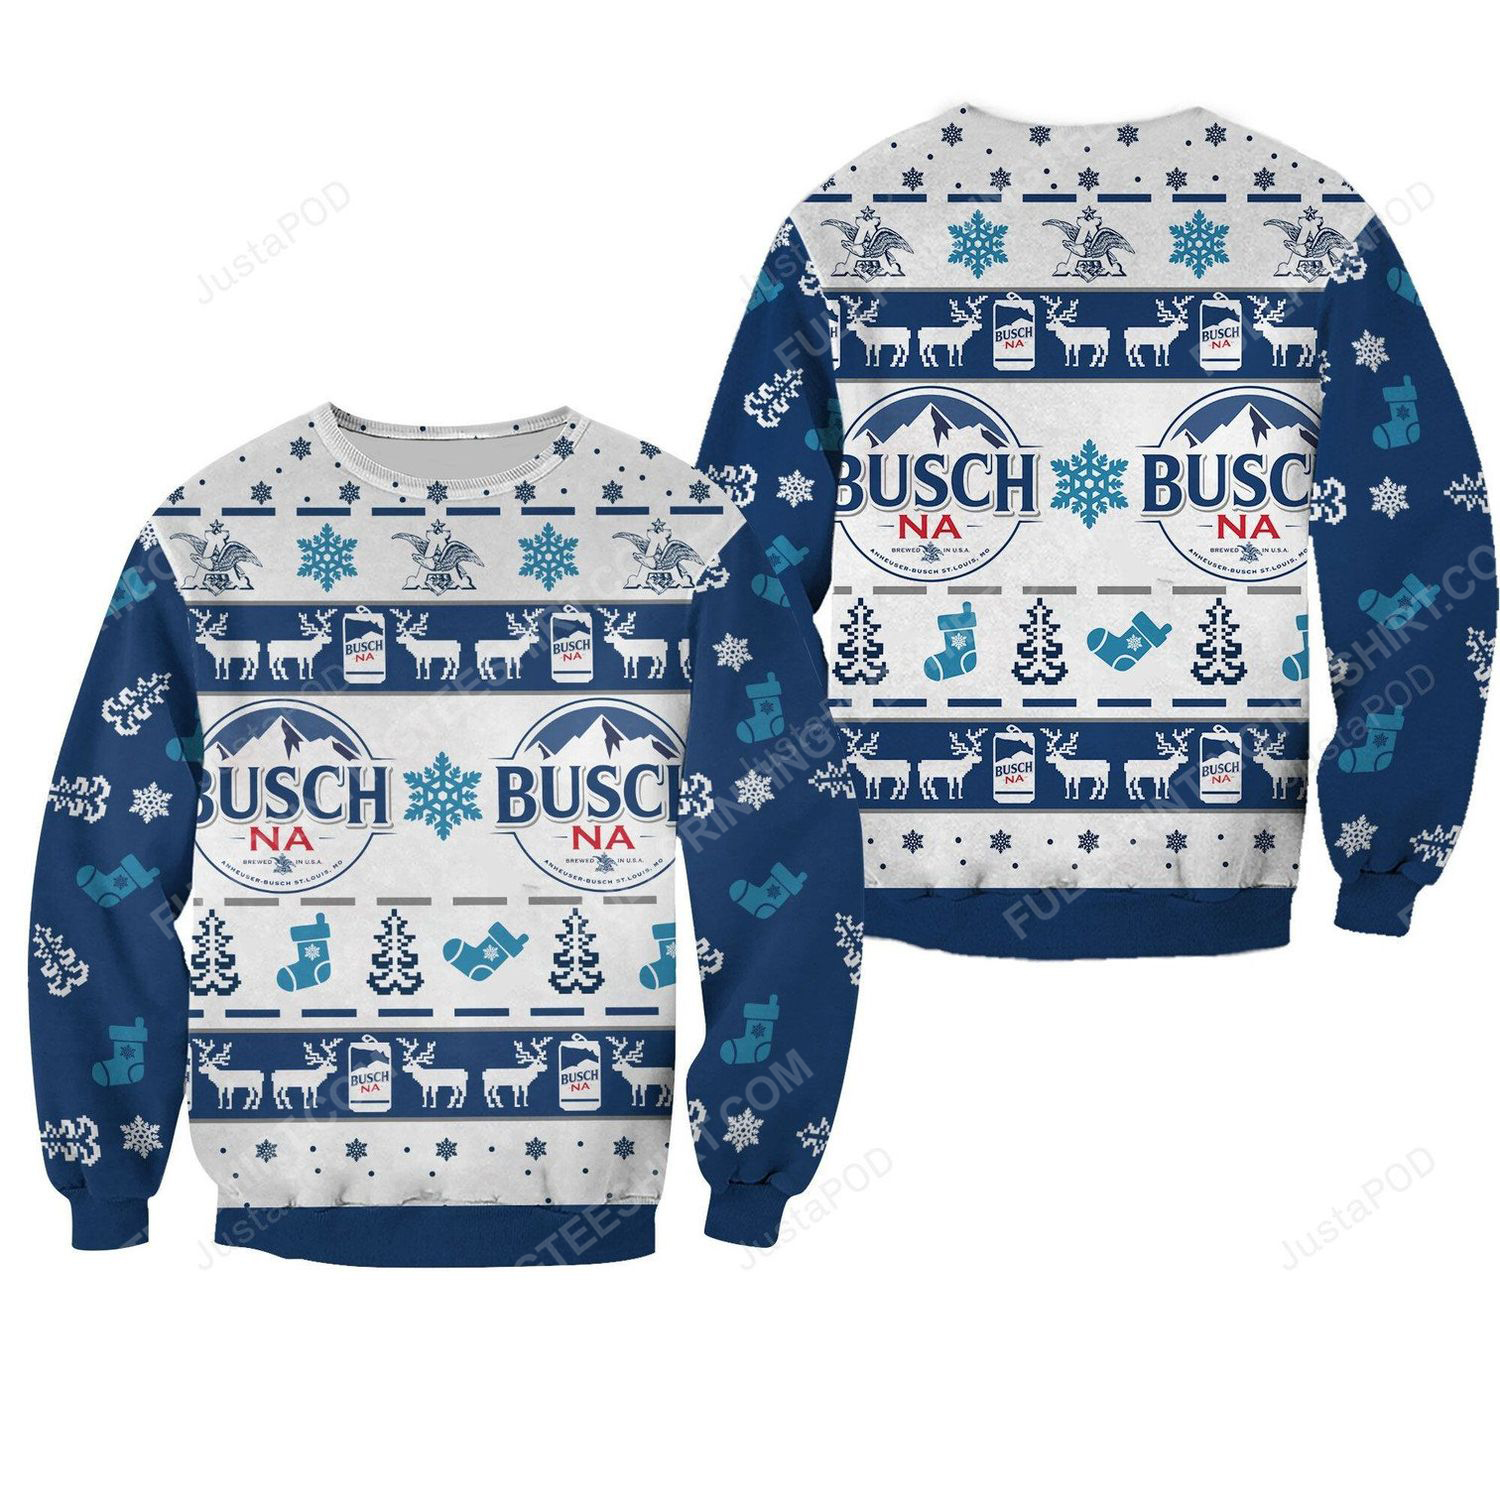 Busch na christmas gift ugly christmas sweater